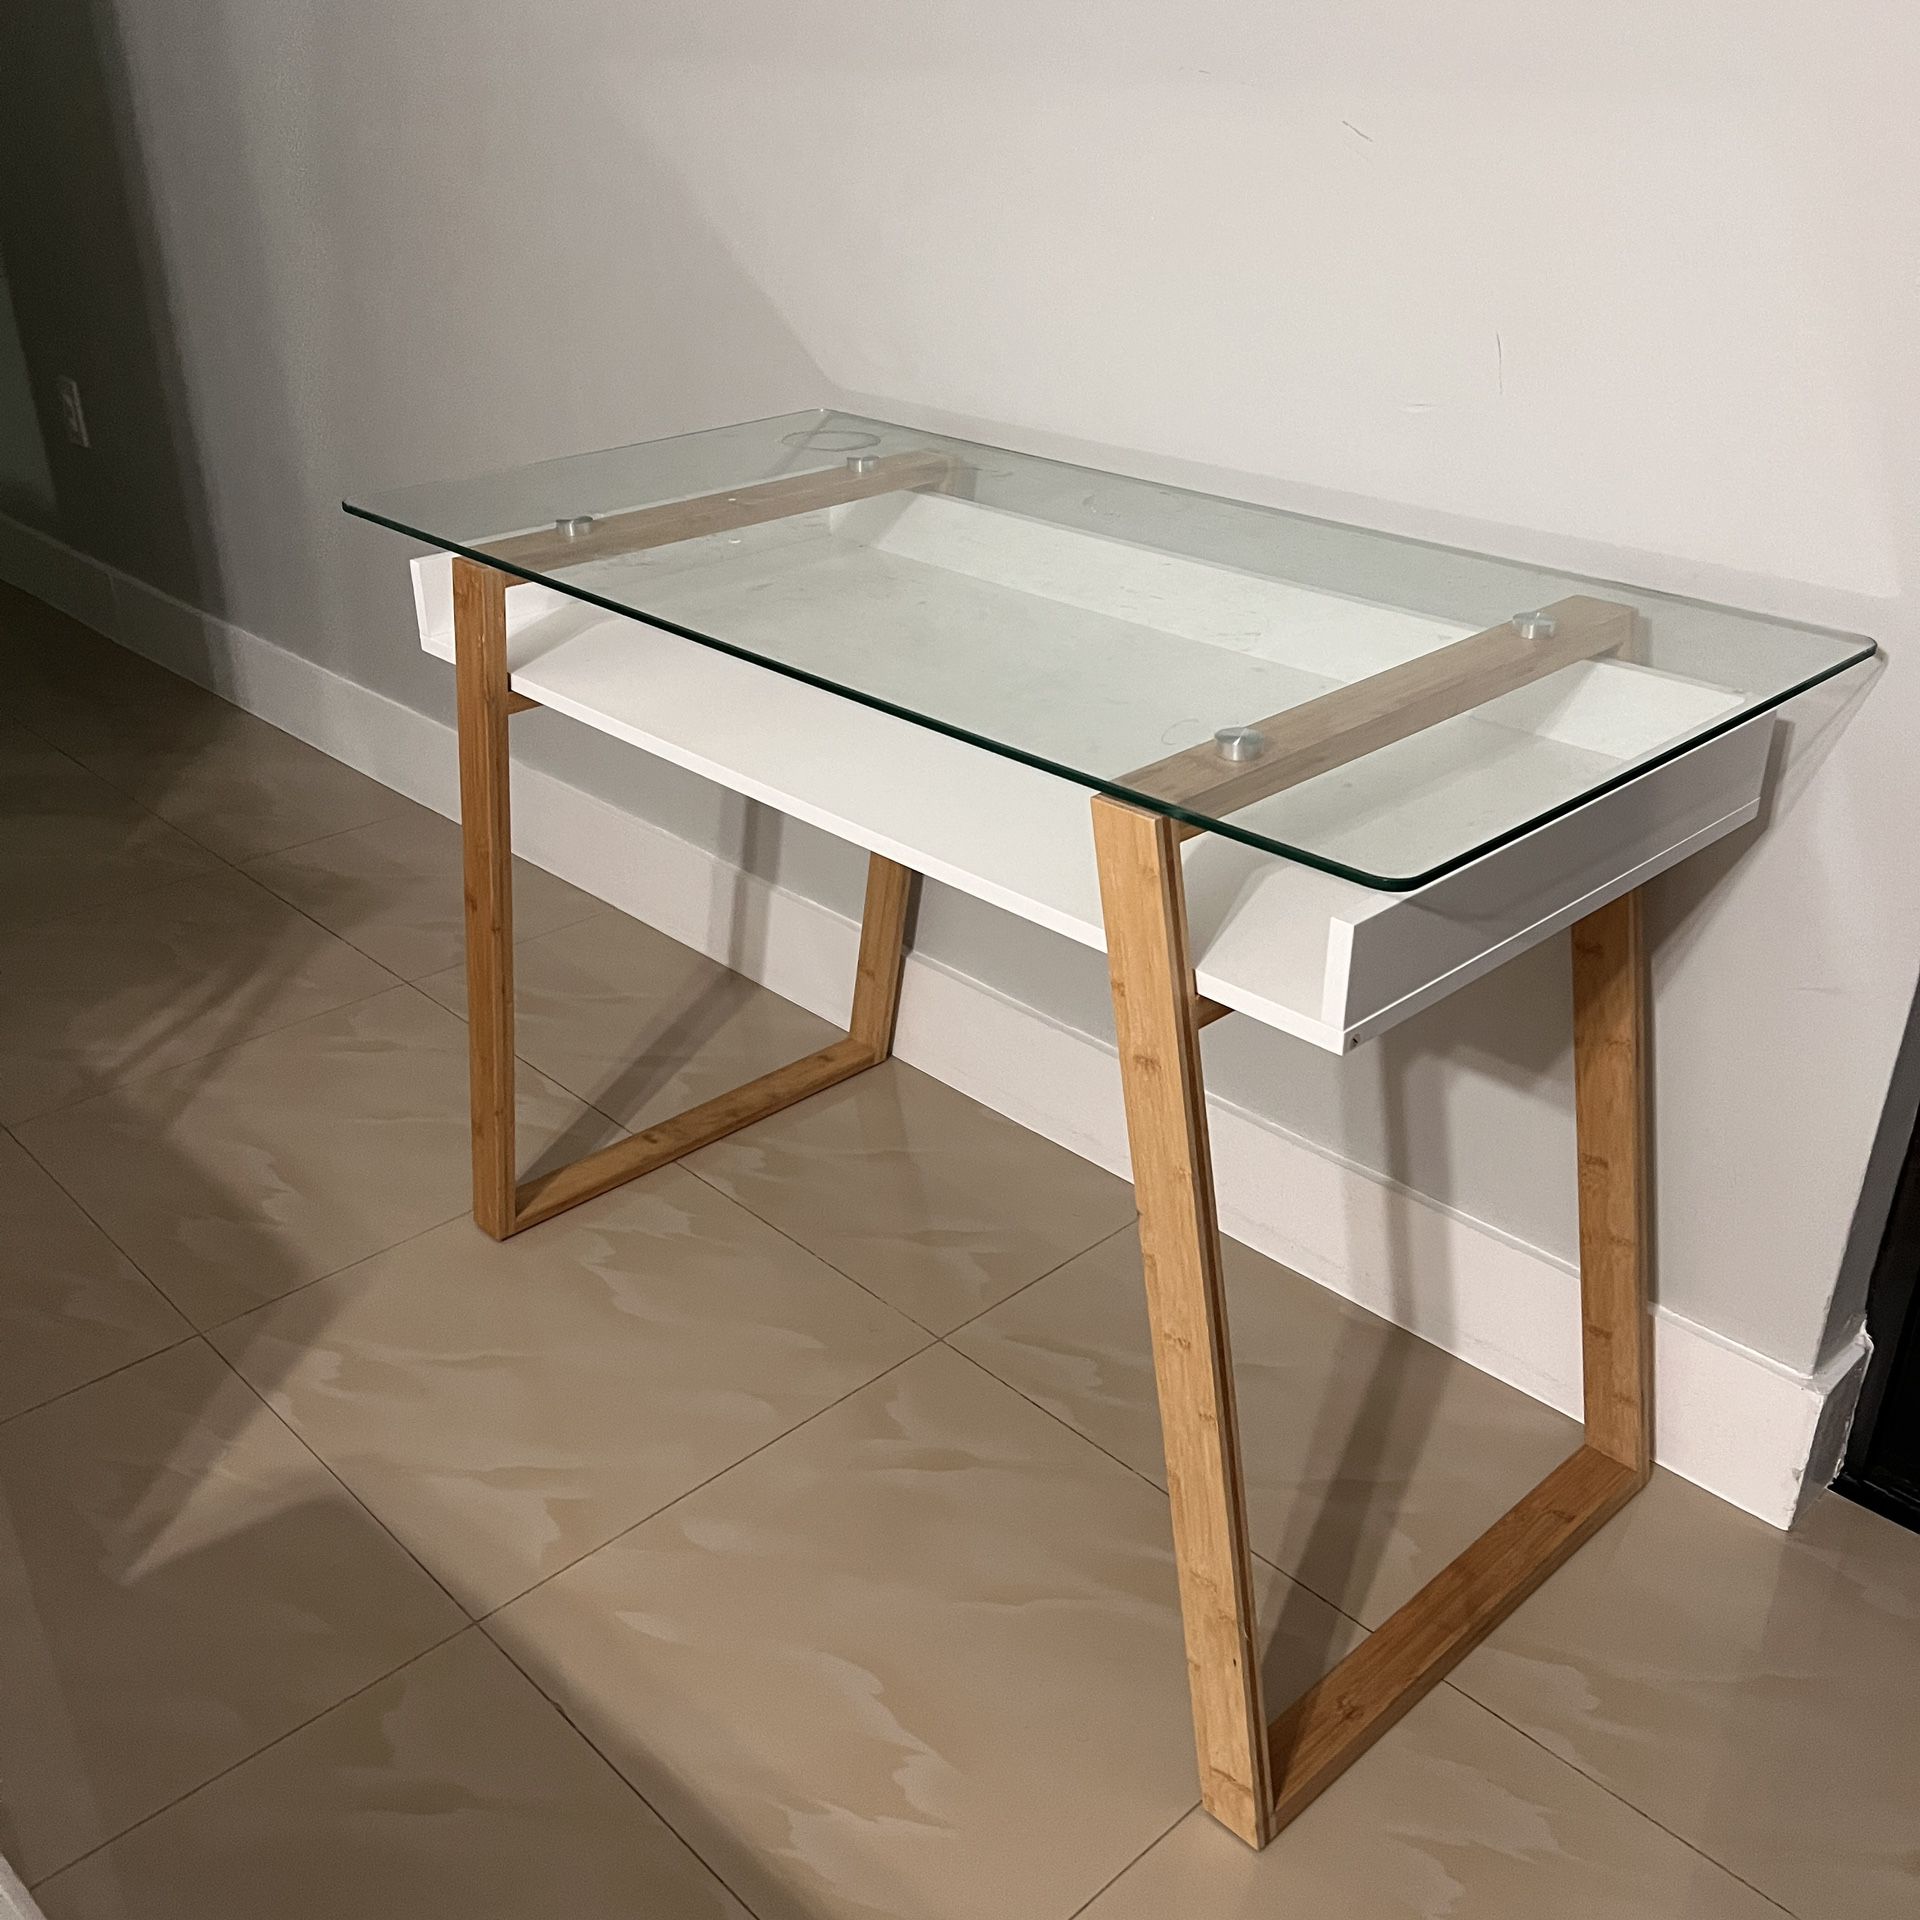 Glass Top Desk 